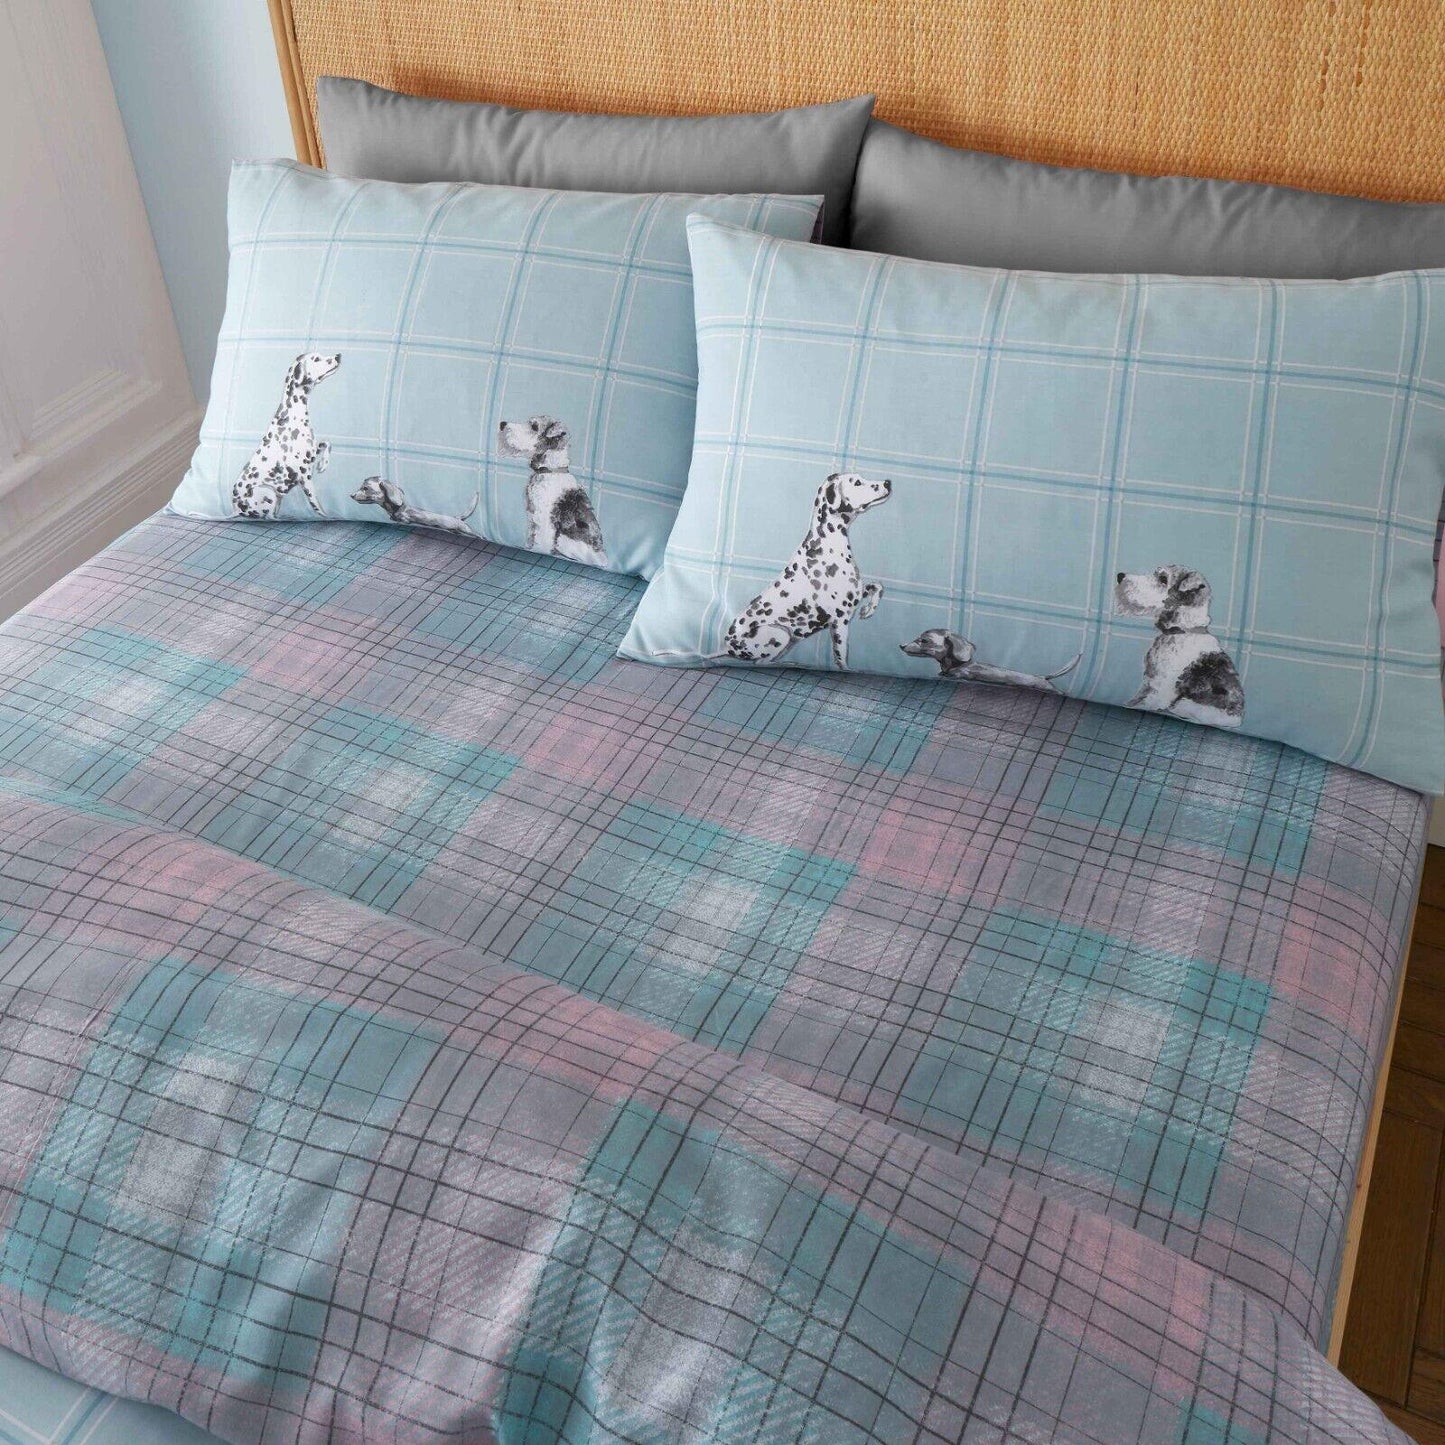 Dog Pals Blue Green Tartan Check Print Duvet Cover Bedding Set - Home Inspired Gifts